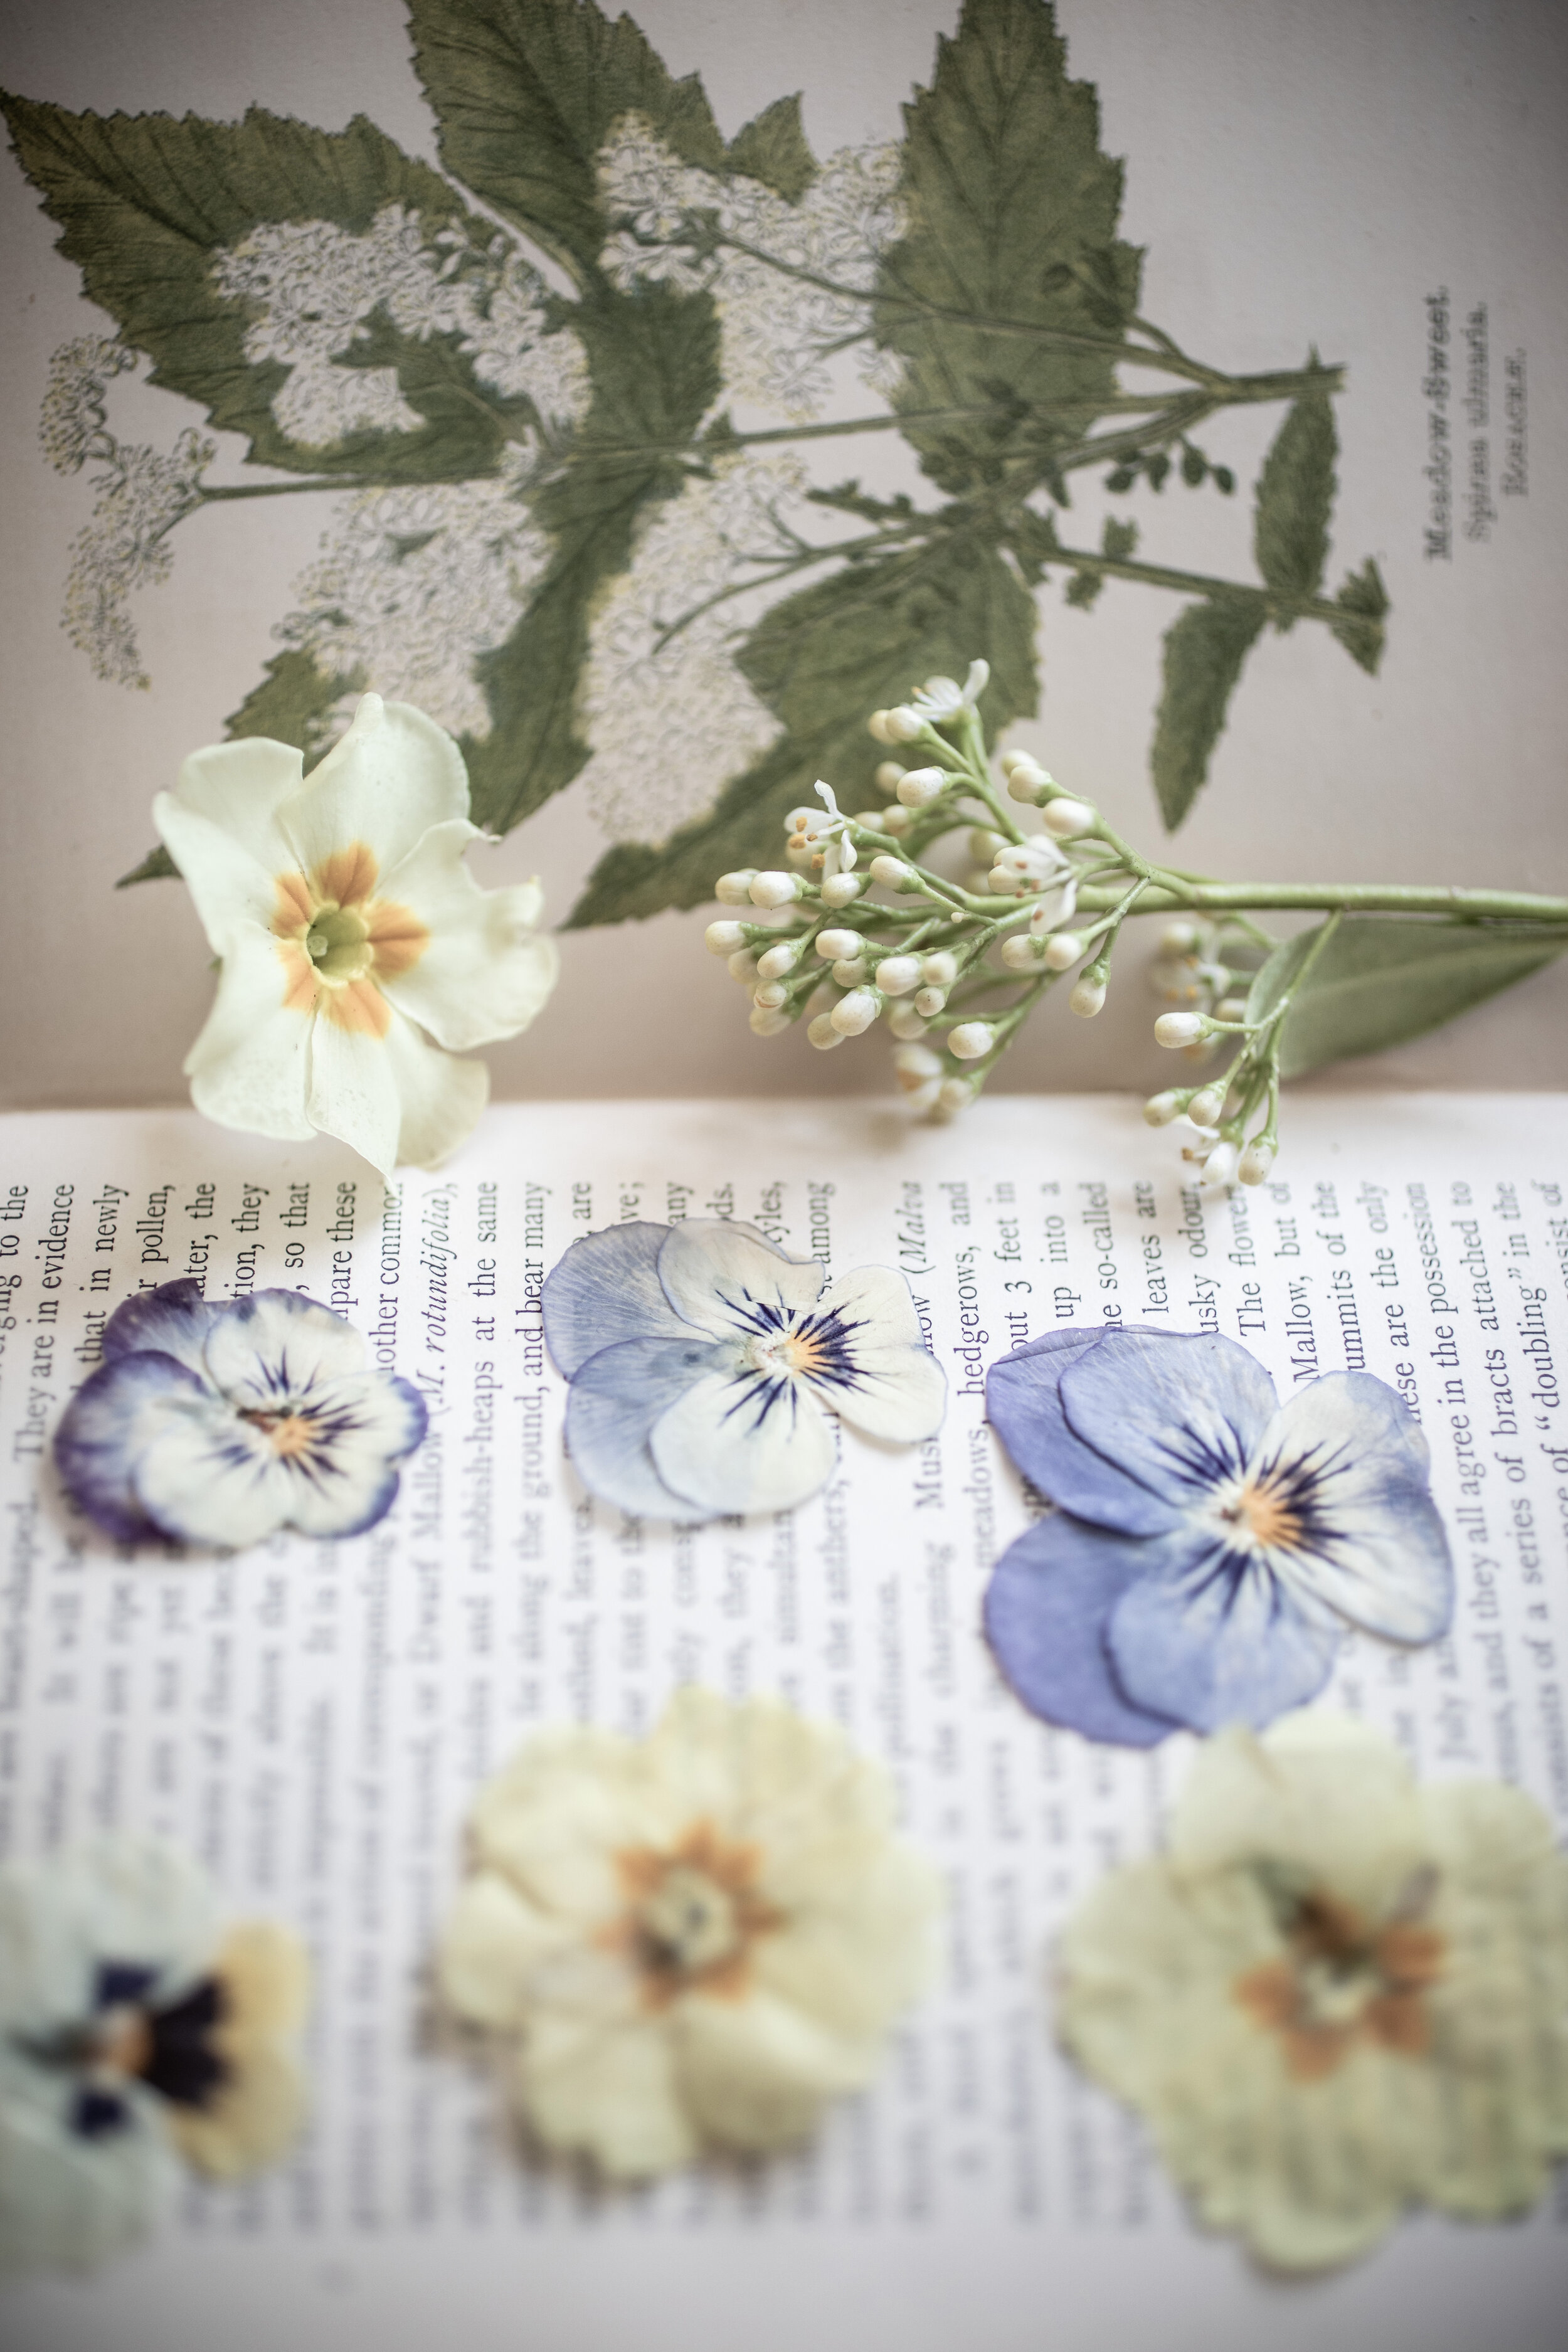 press flowers in books